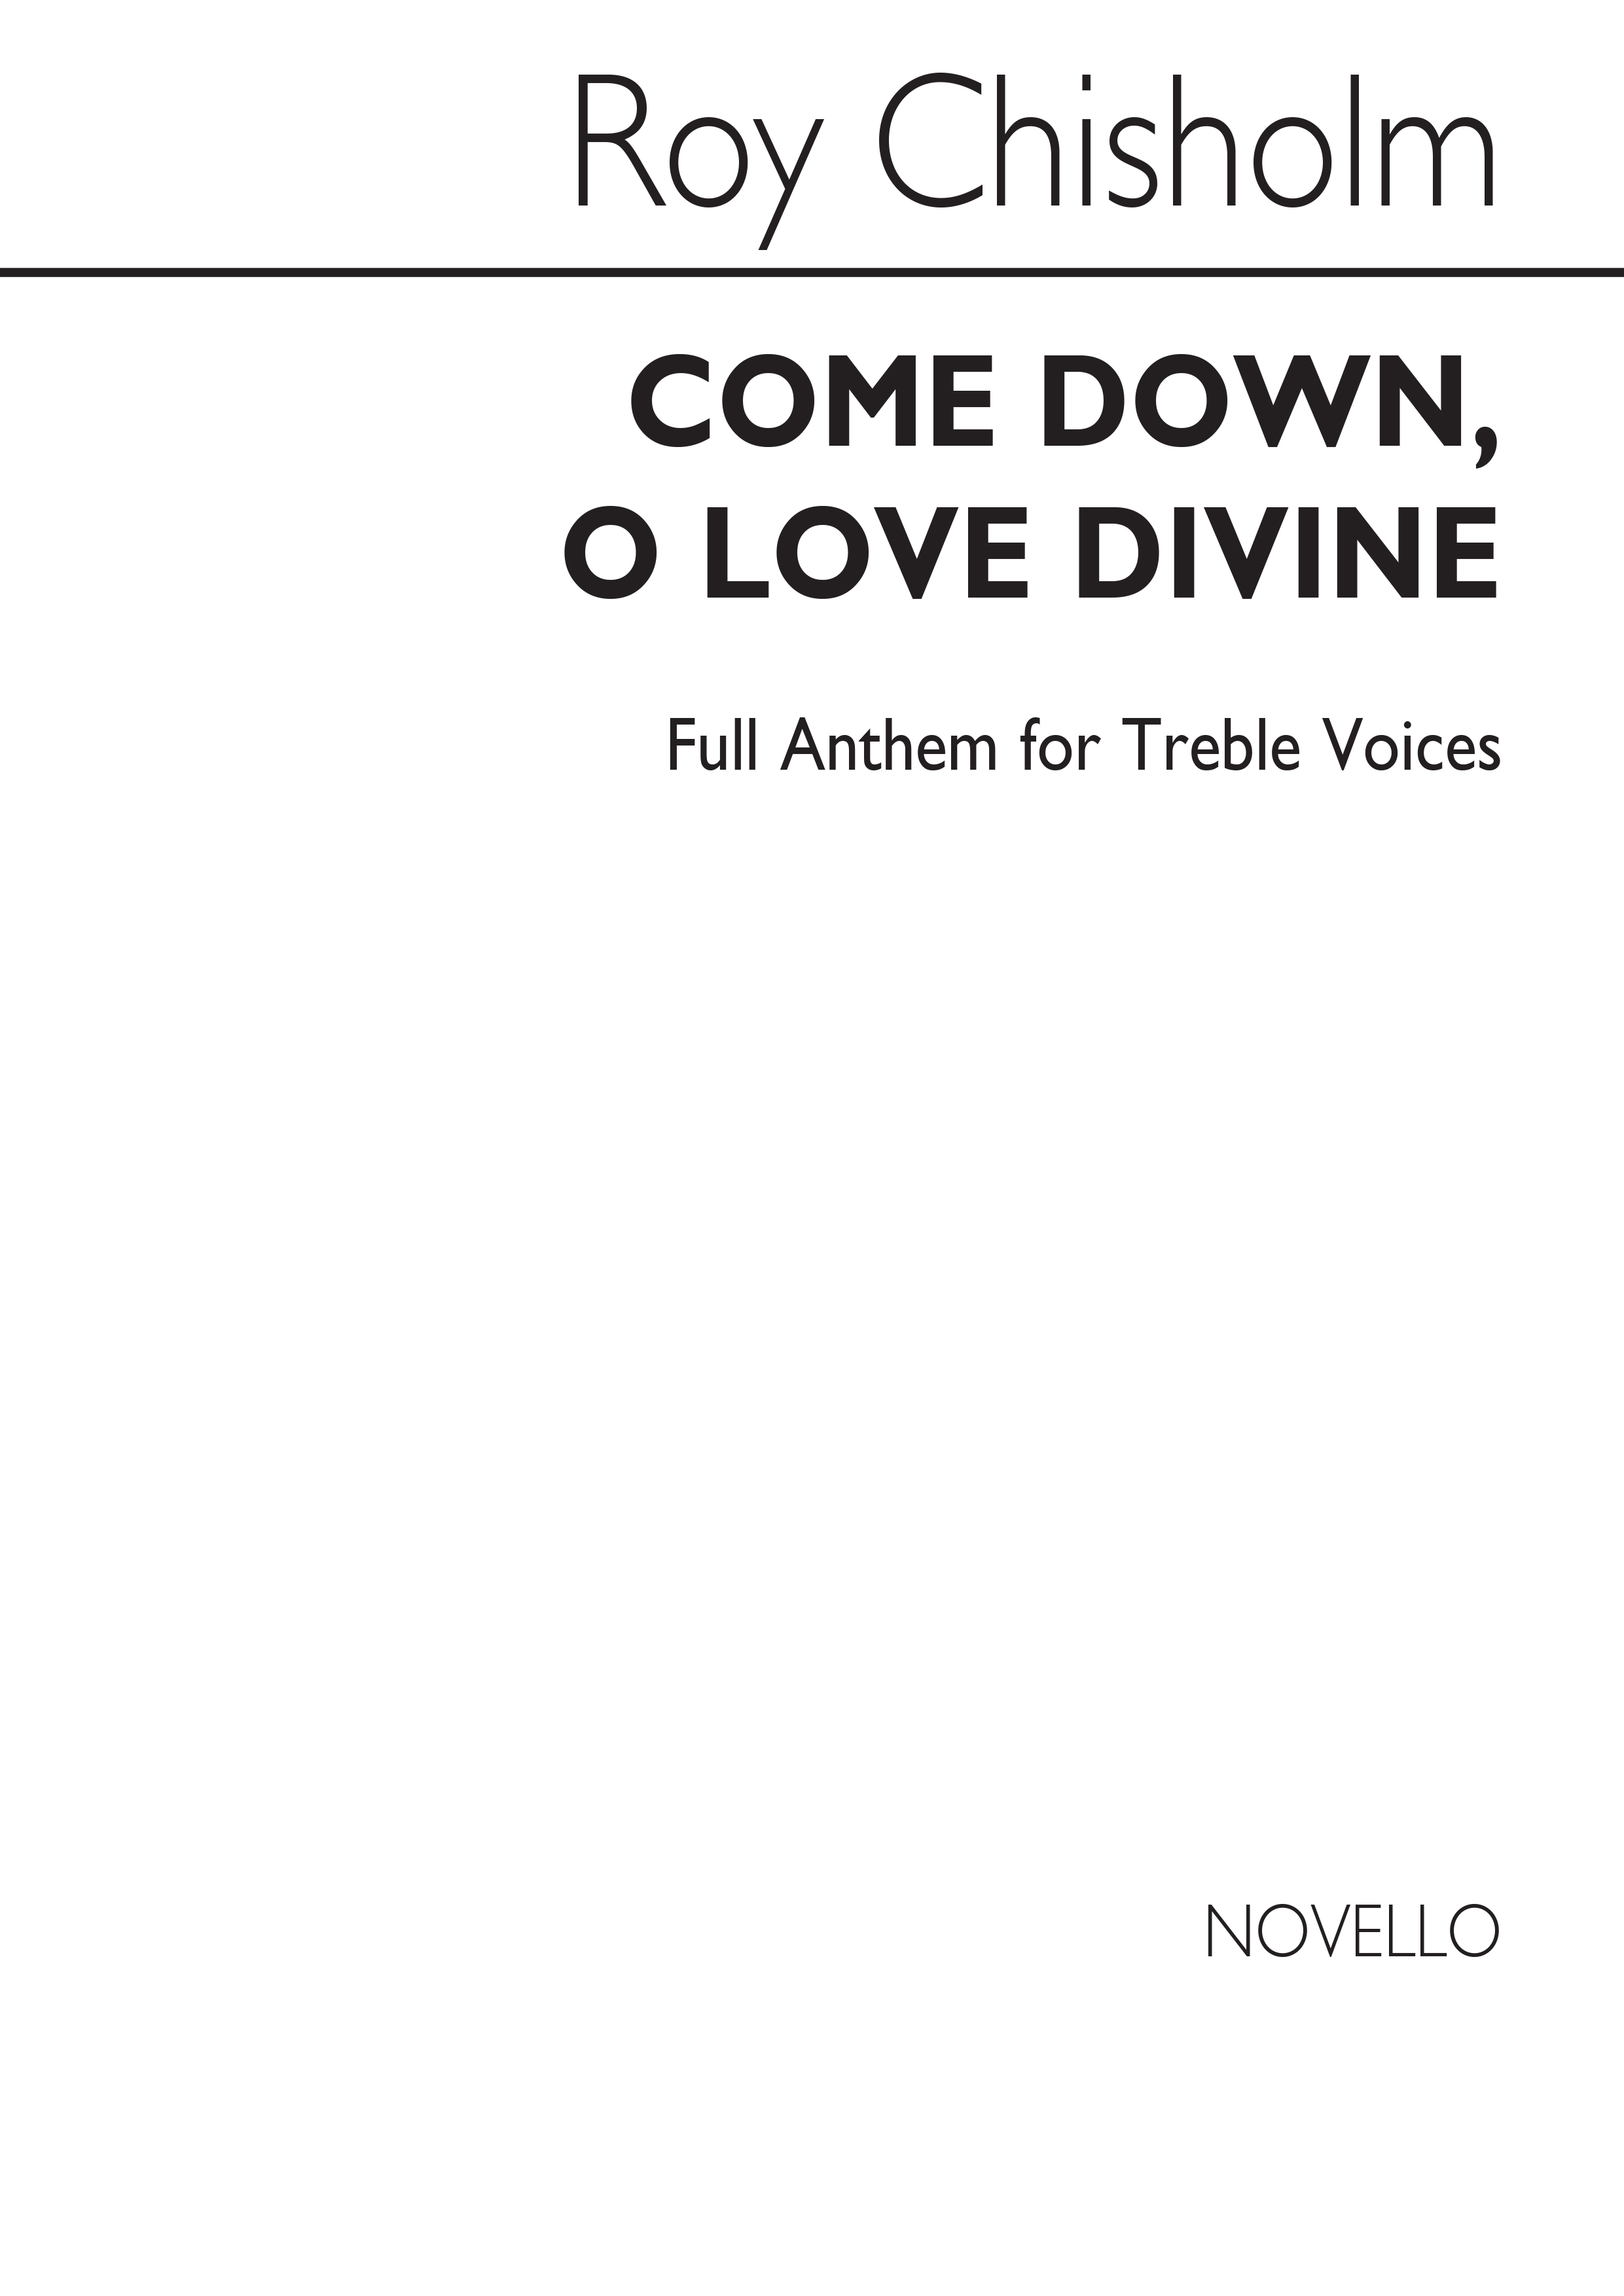 Chisholm: Come Down O Love Divine for UNISON Chorus